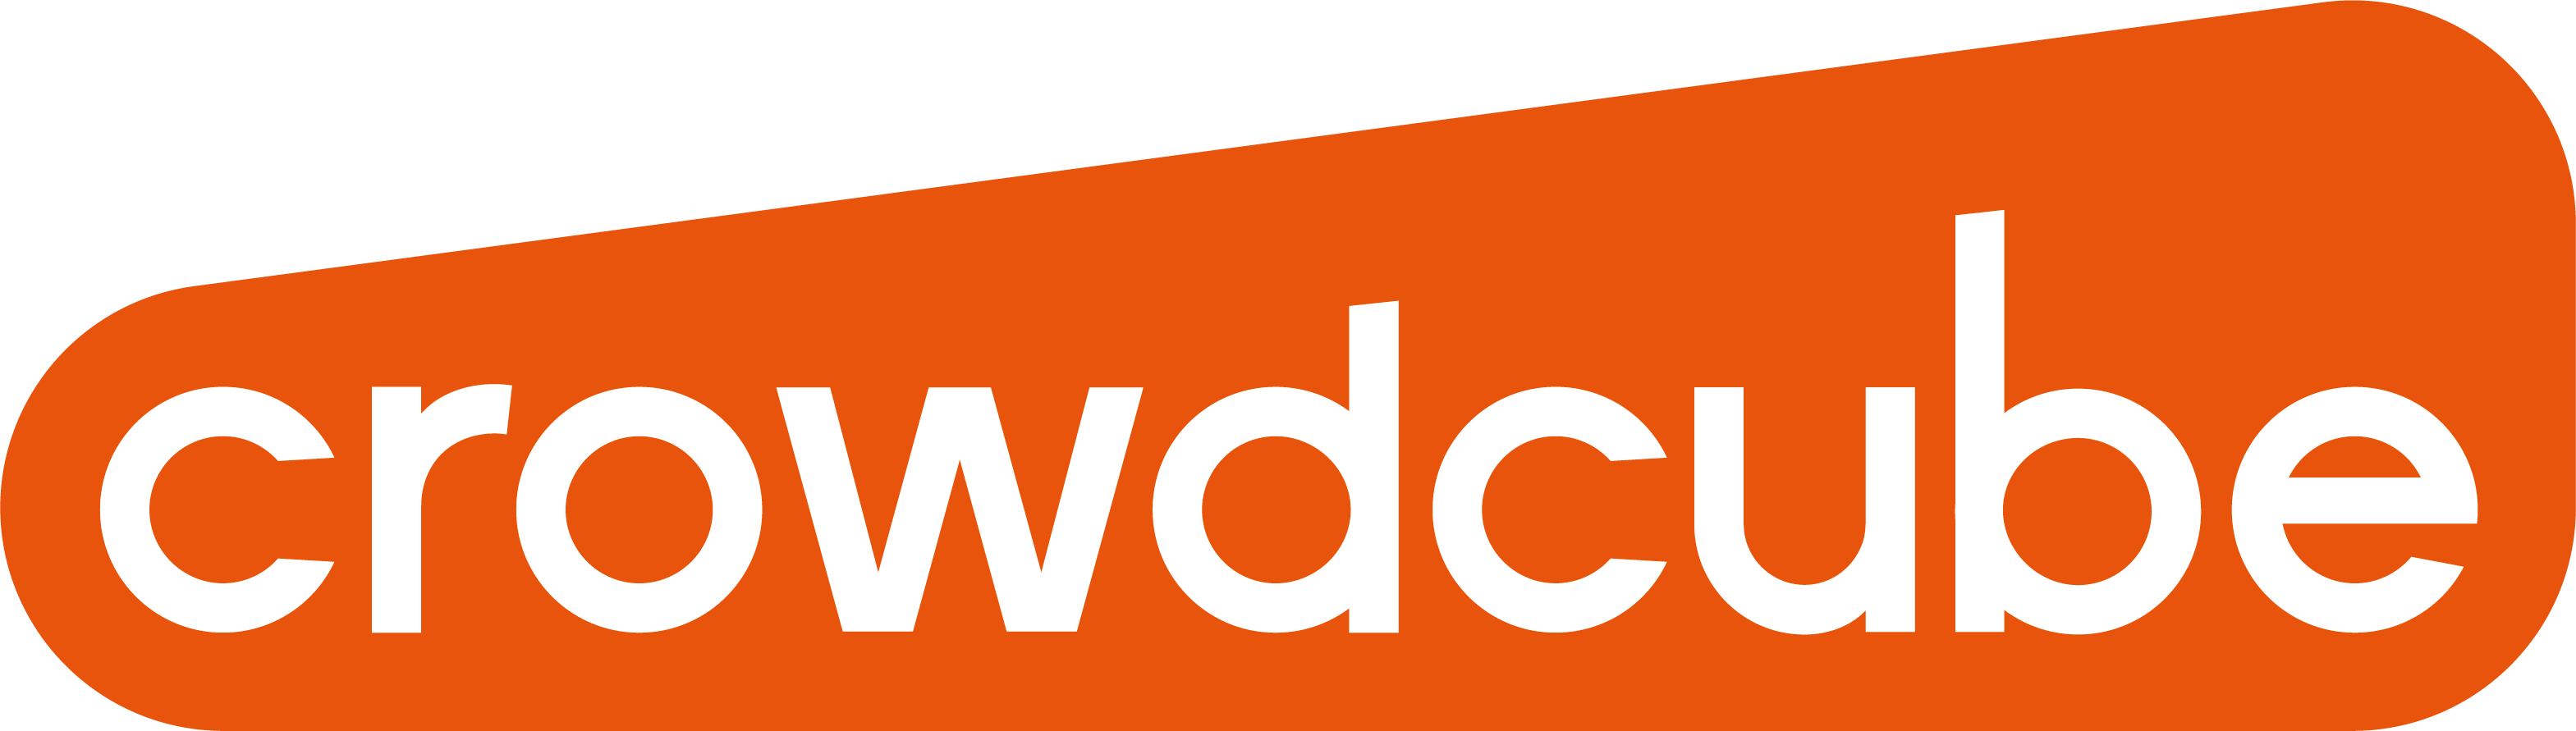 Crowdcube logo